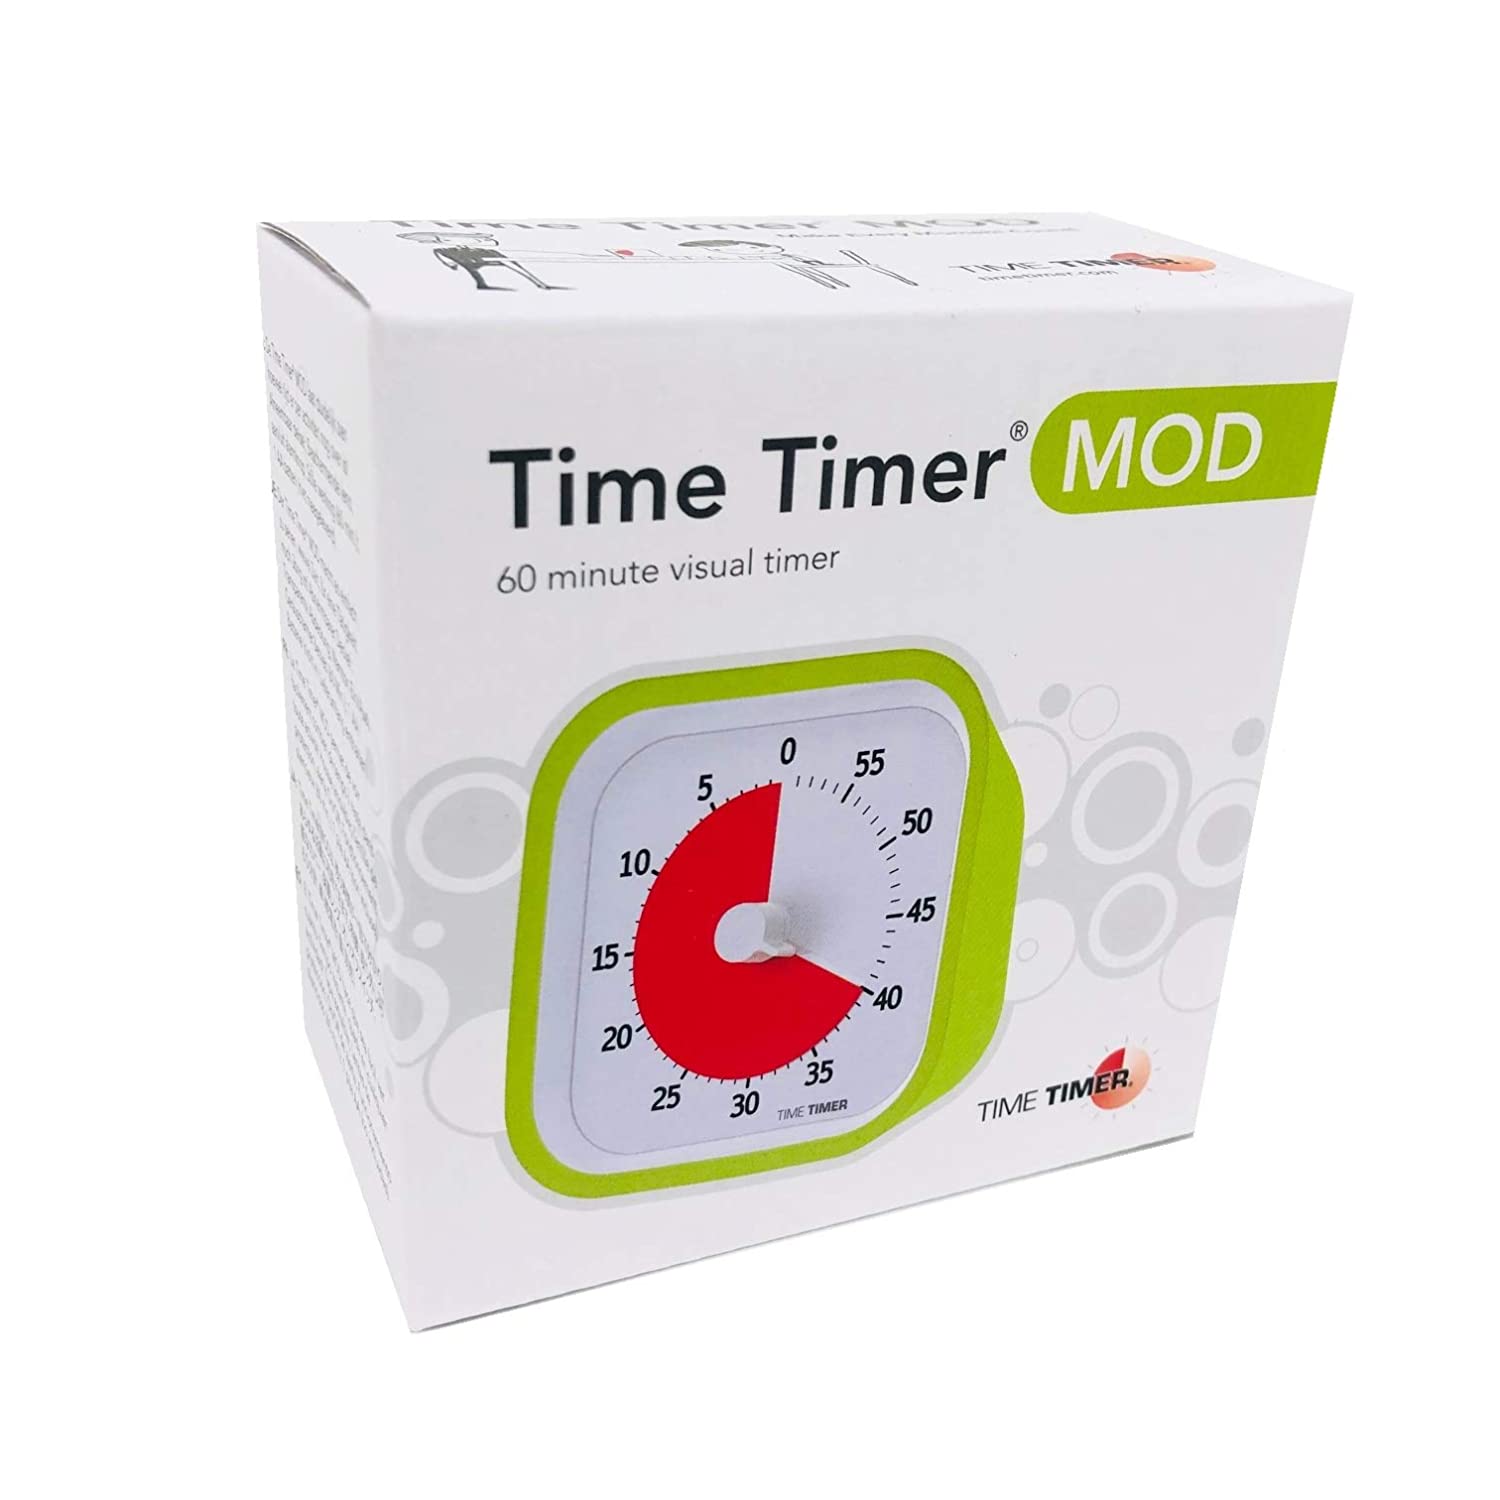 TIME TIMER TTMM9GR Mod, Timer, Lime Green